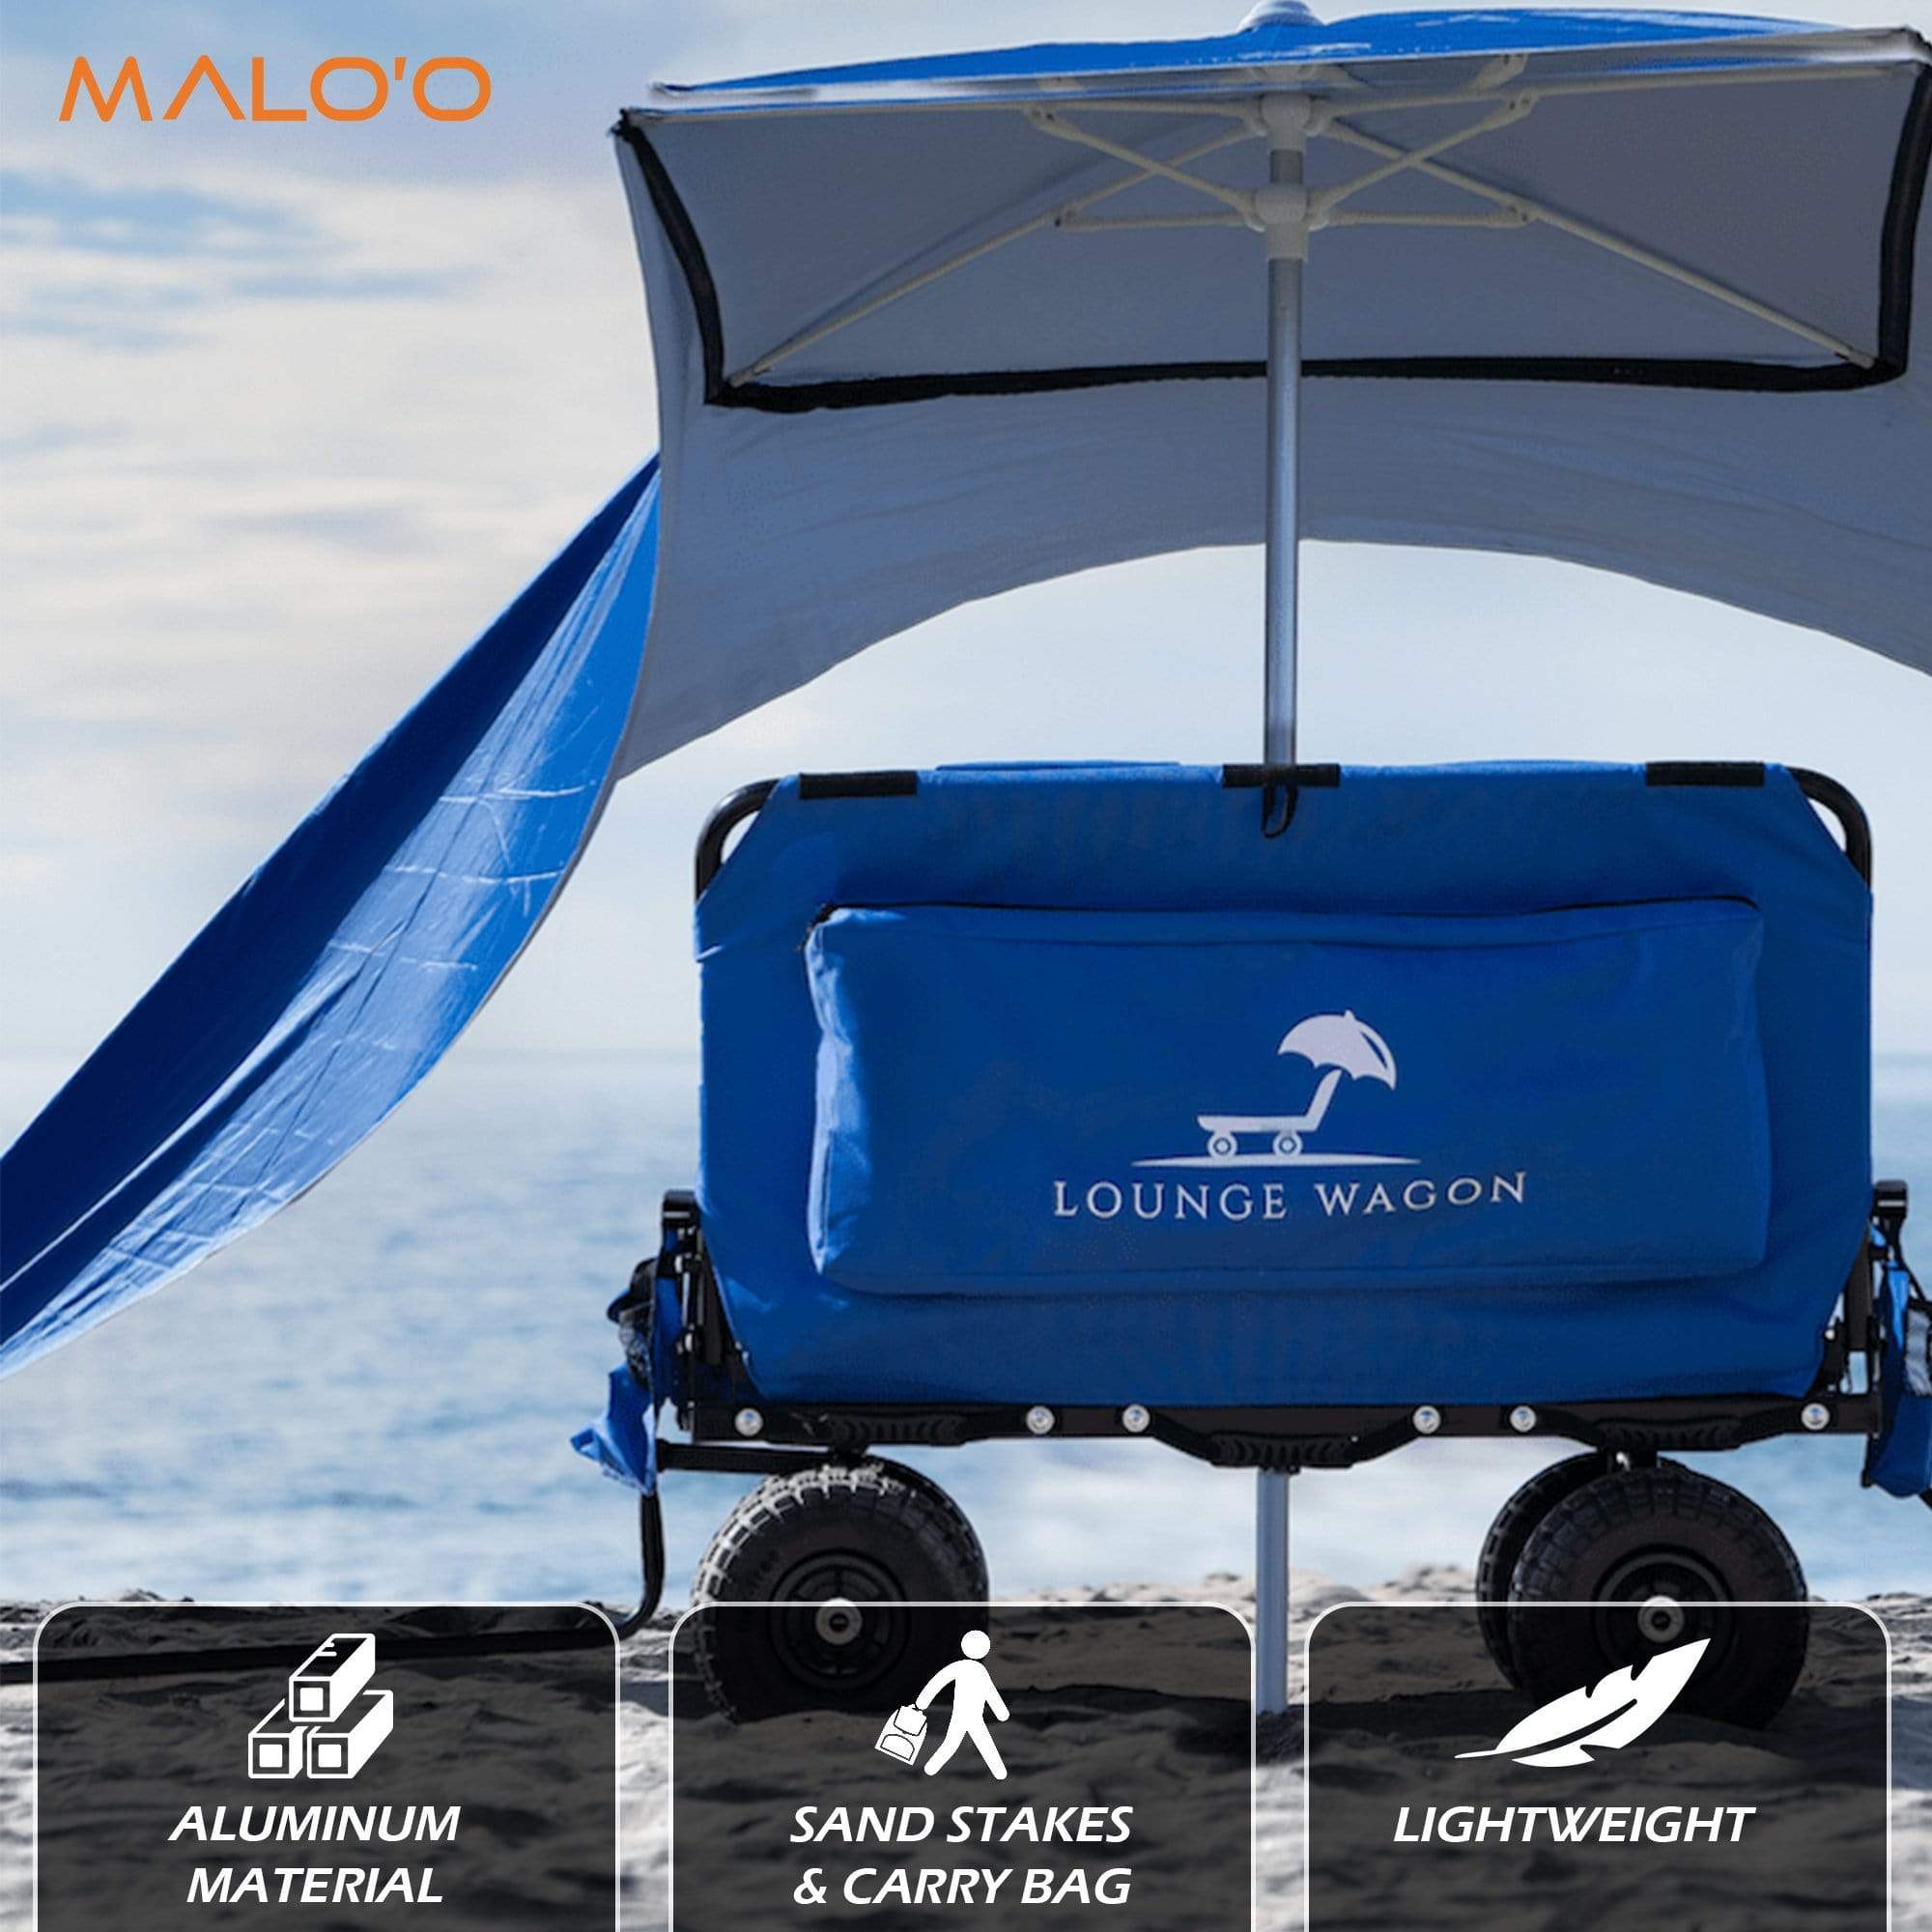 Malo'o Racks Lounge Wagon Beach Umbrella